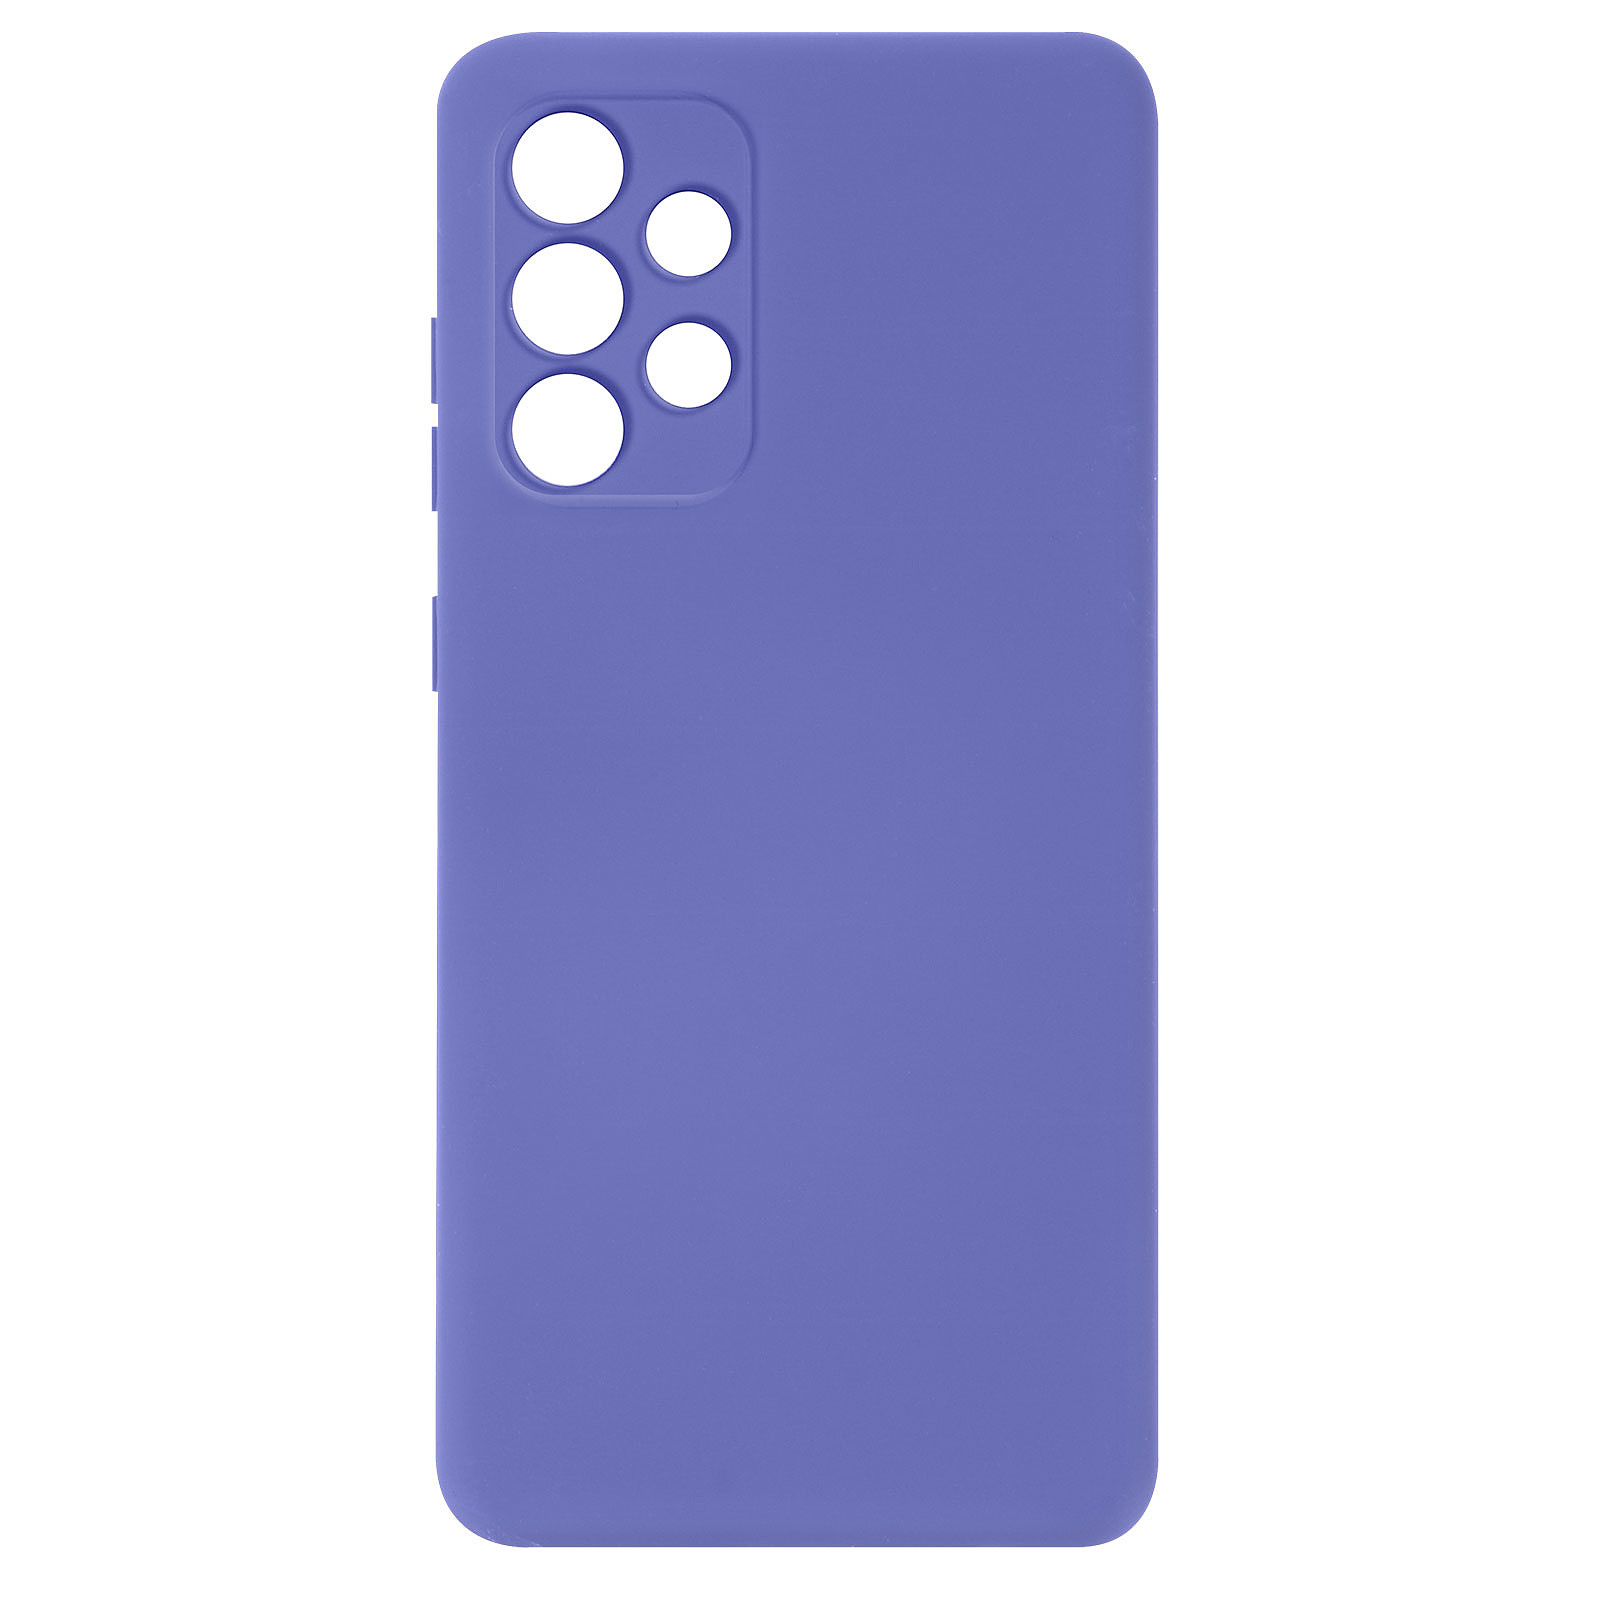 Avizar Coque pour Samsung Galaxy A32 Silicone Semi-rigide Finition Soft Touch Fine Violet - Coque telephone Avizar